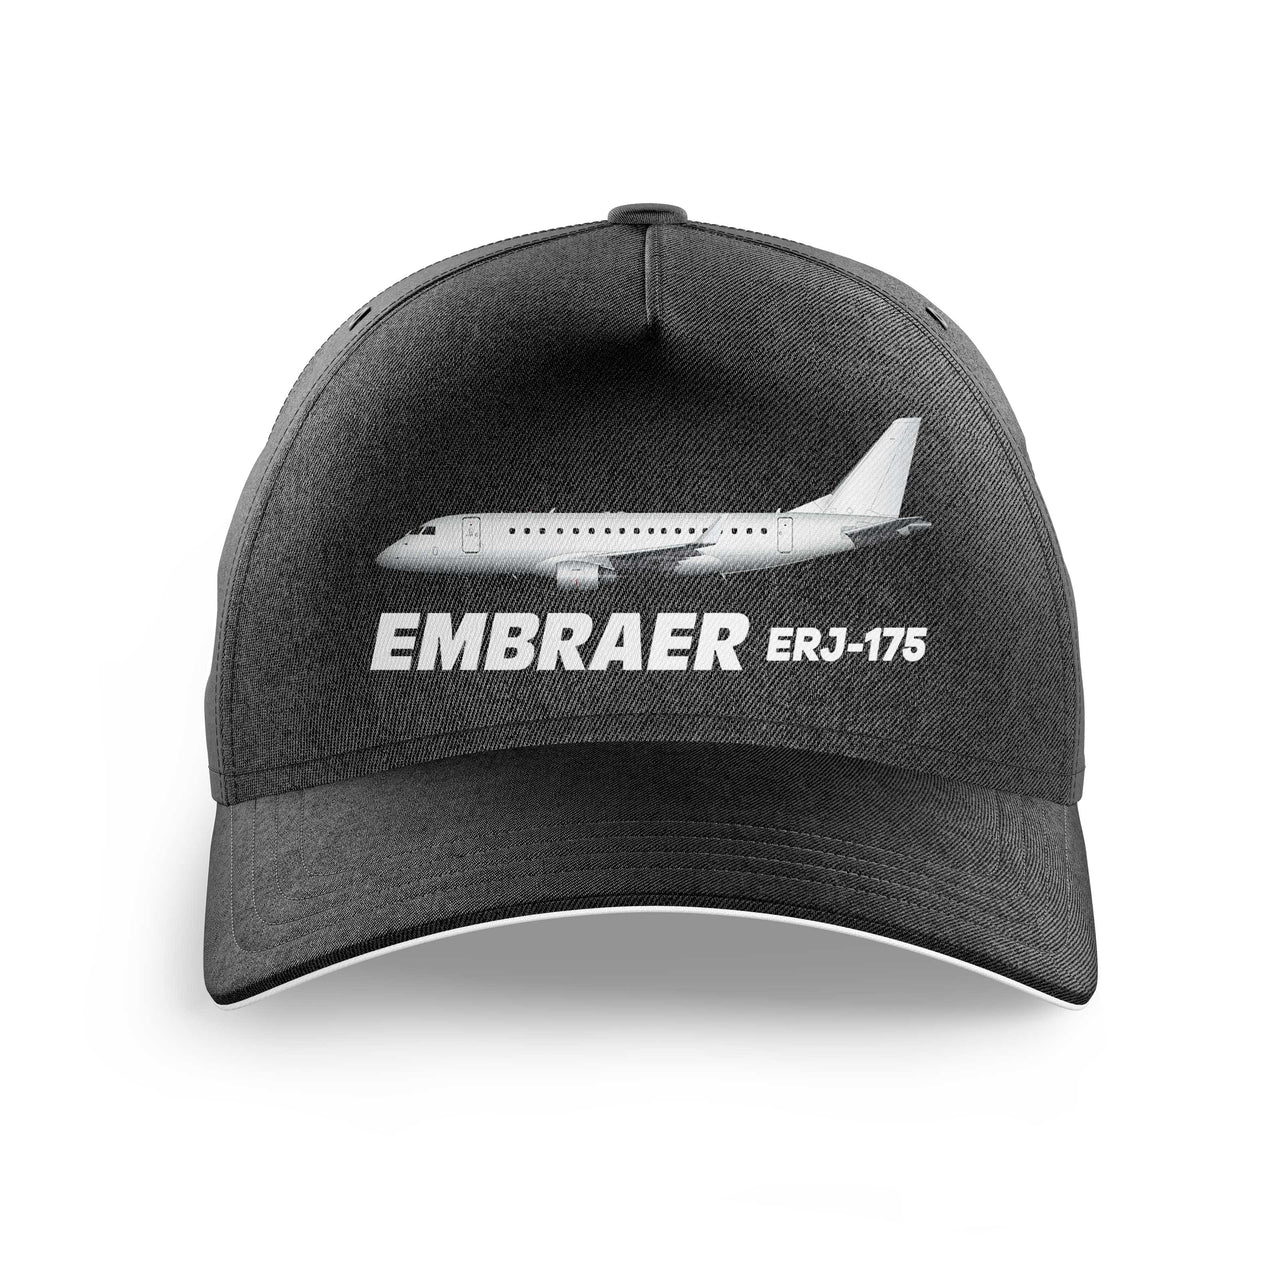 The Embraer ERJ-175 Printed Hats